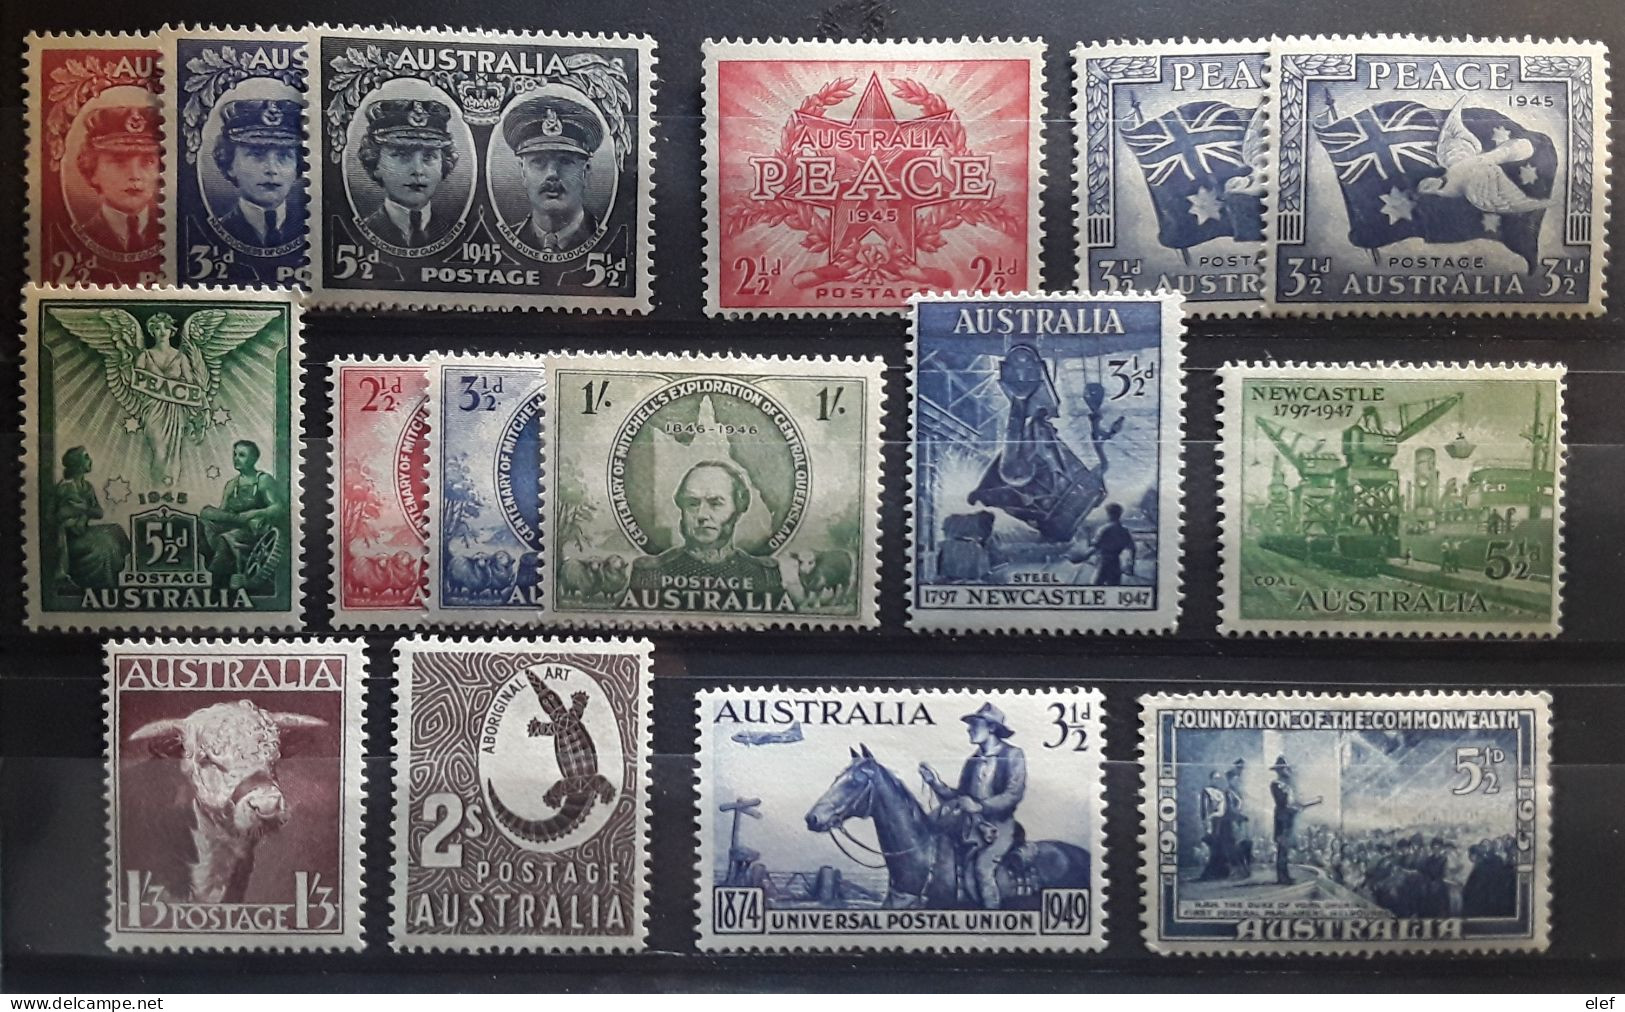 AUSTRALIA 1945 - 1951, Commémoratifs 16 Timbres Entre Yvert No 146 - 179 , Neufs ** / * MH / MNH , TB - Mint Stamps